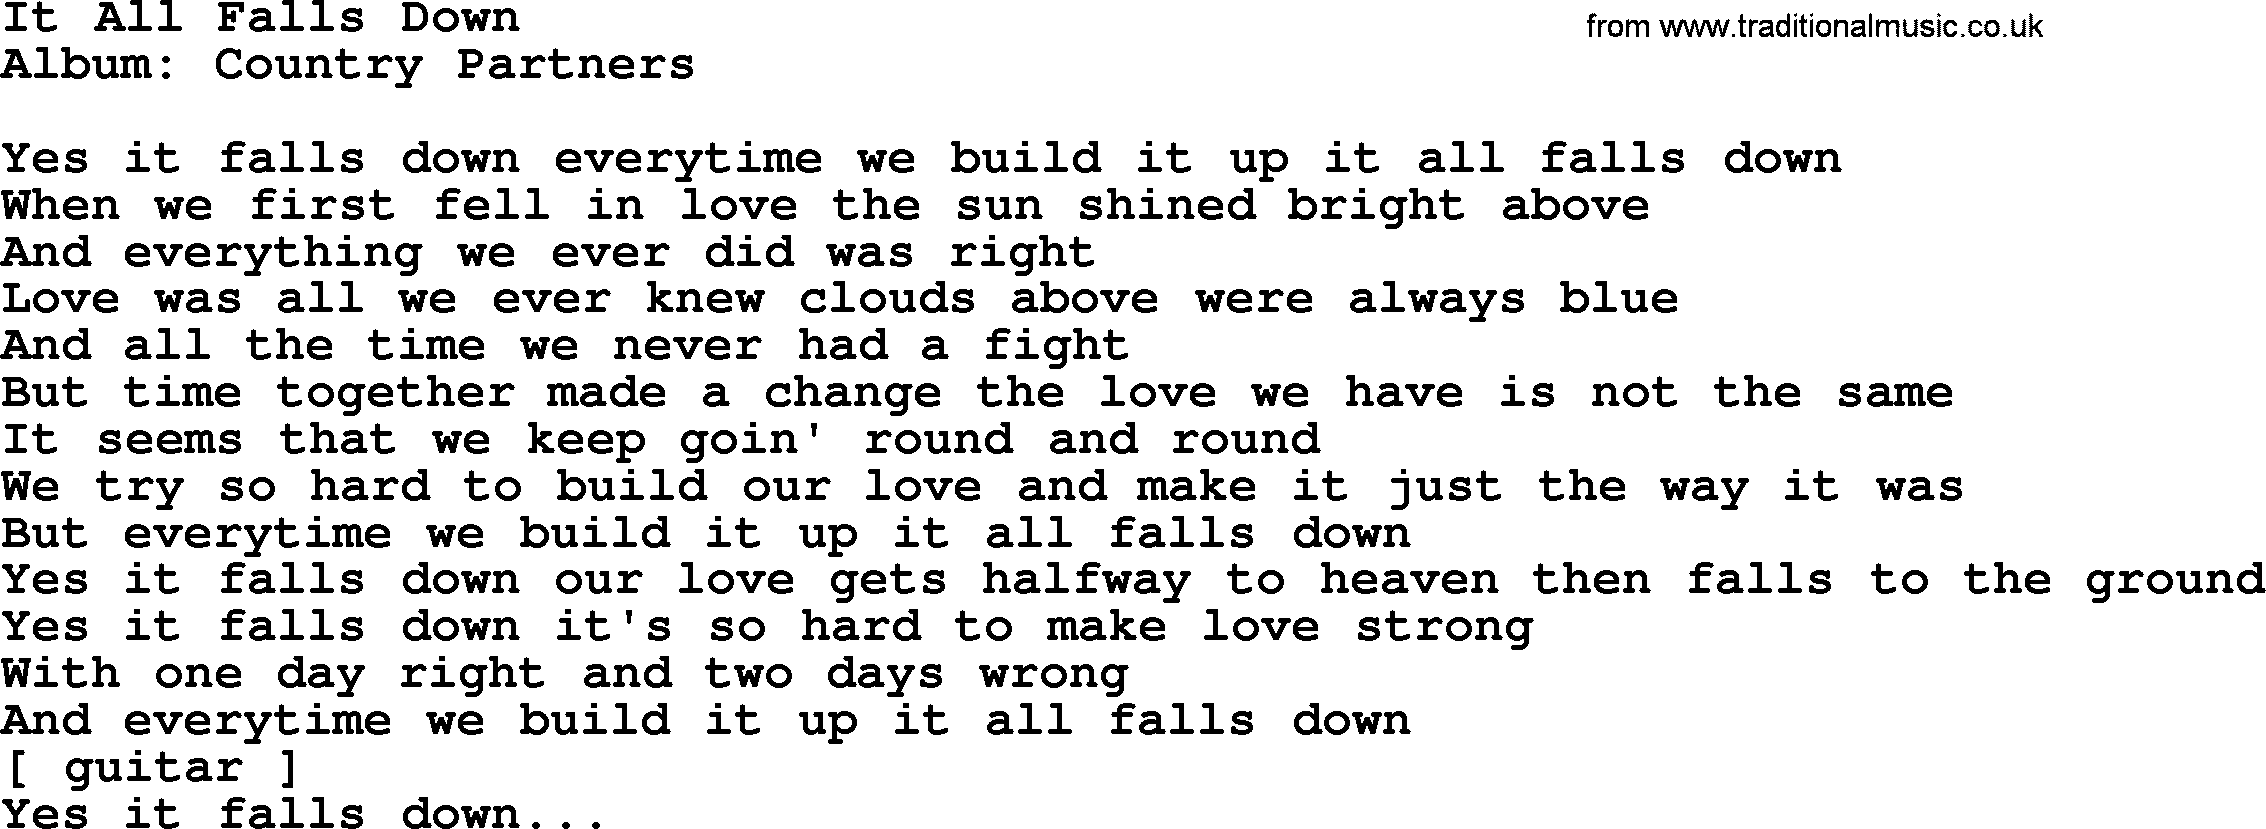 Loretta Lynn song: It All Falls Down lyrics